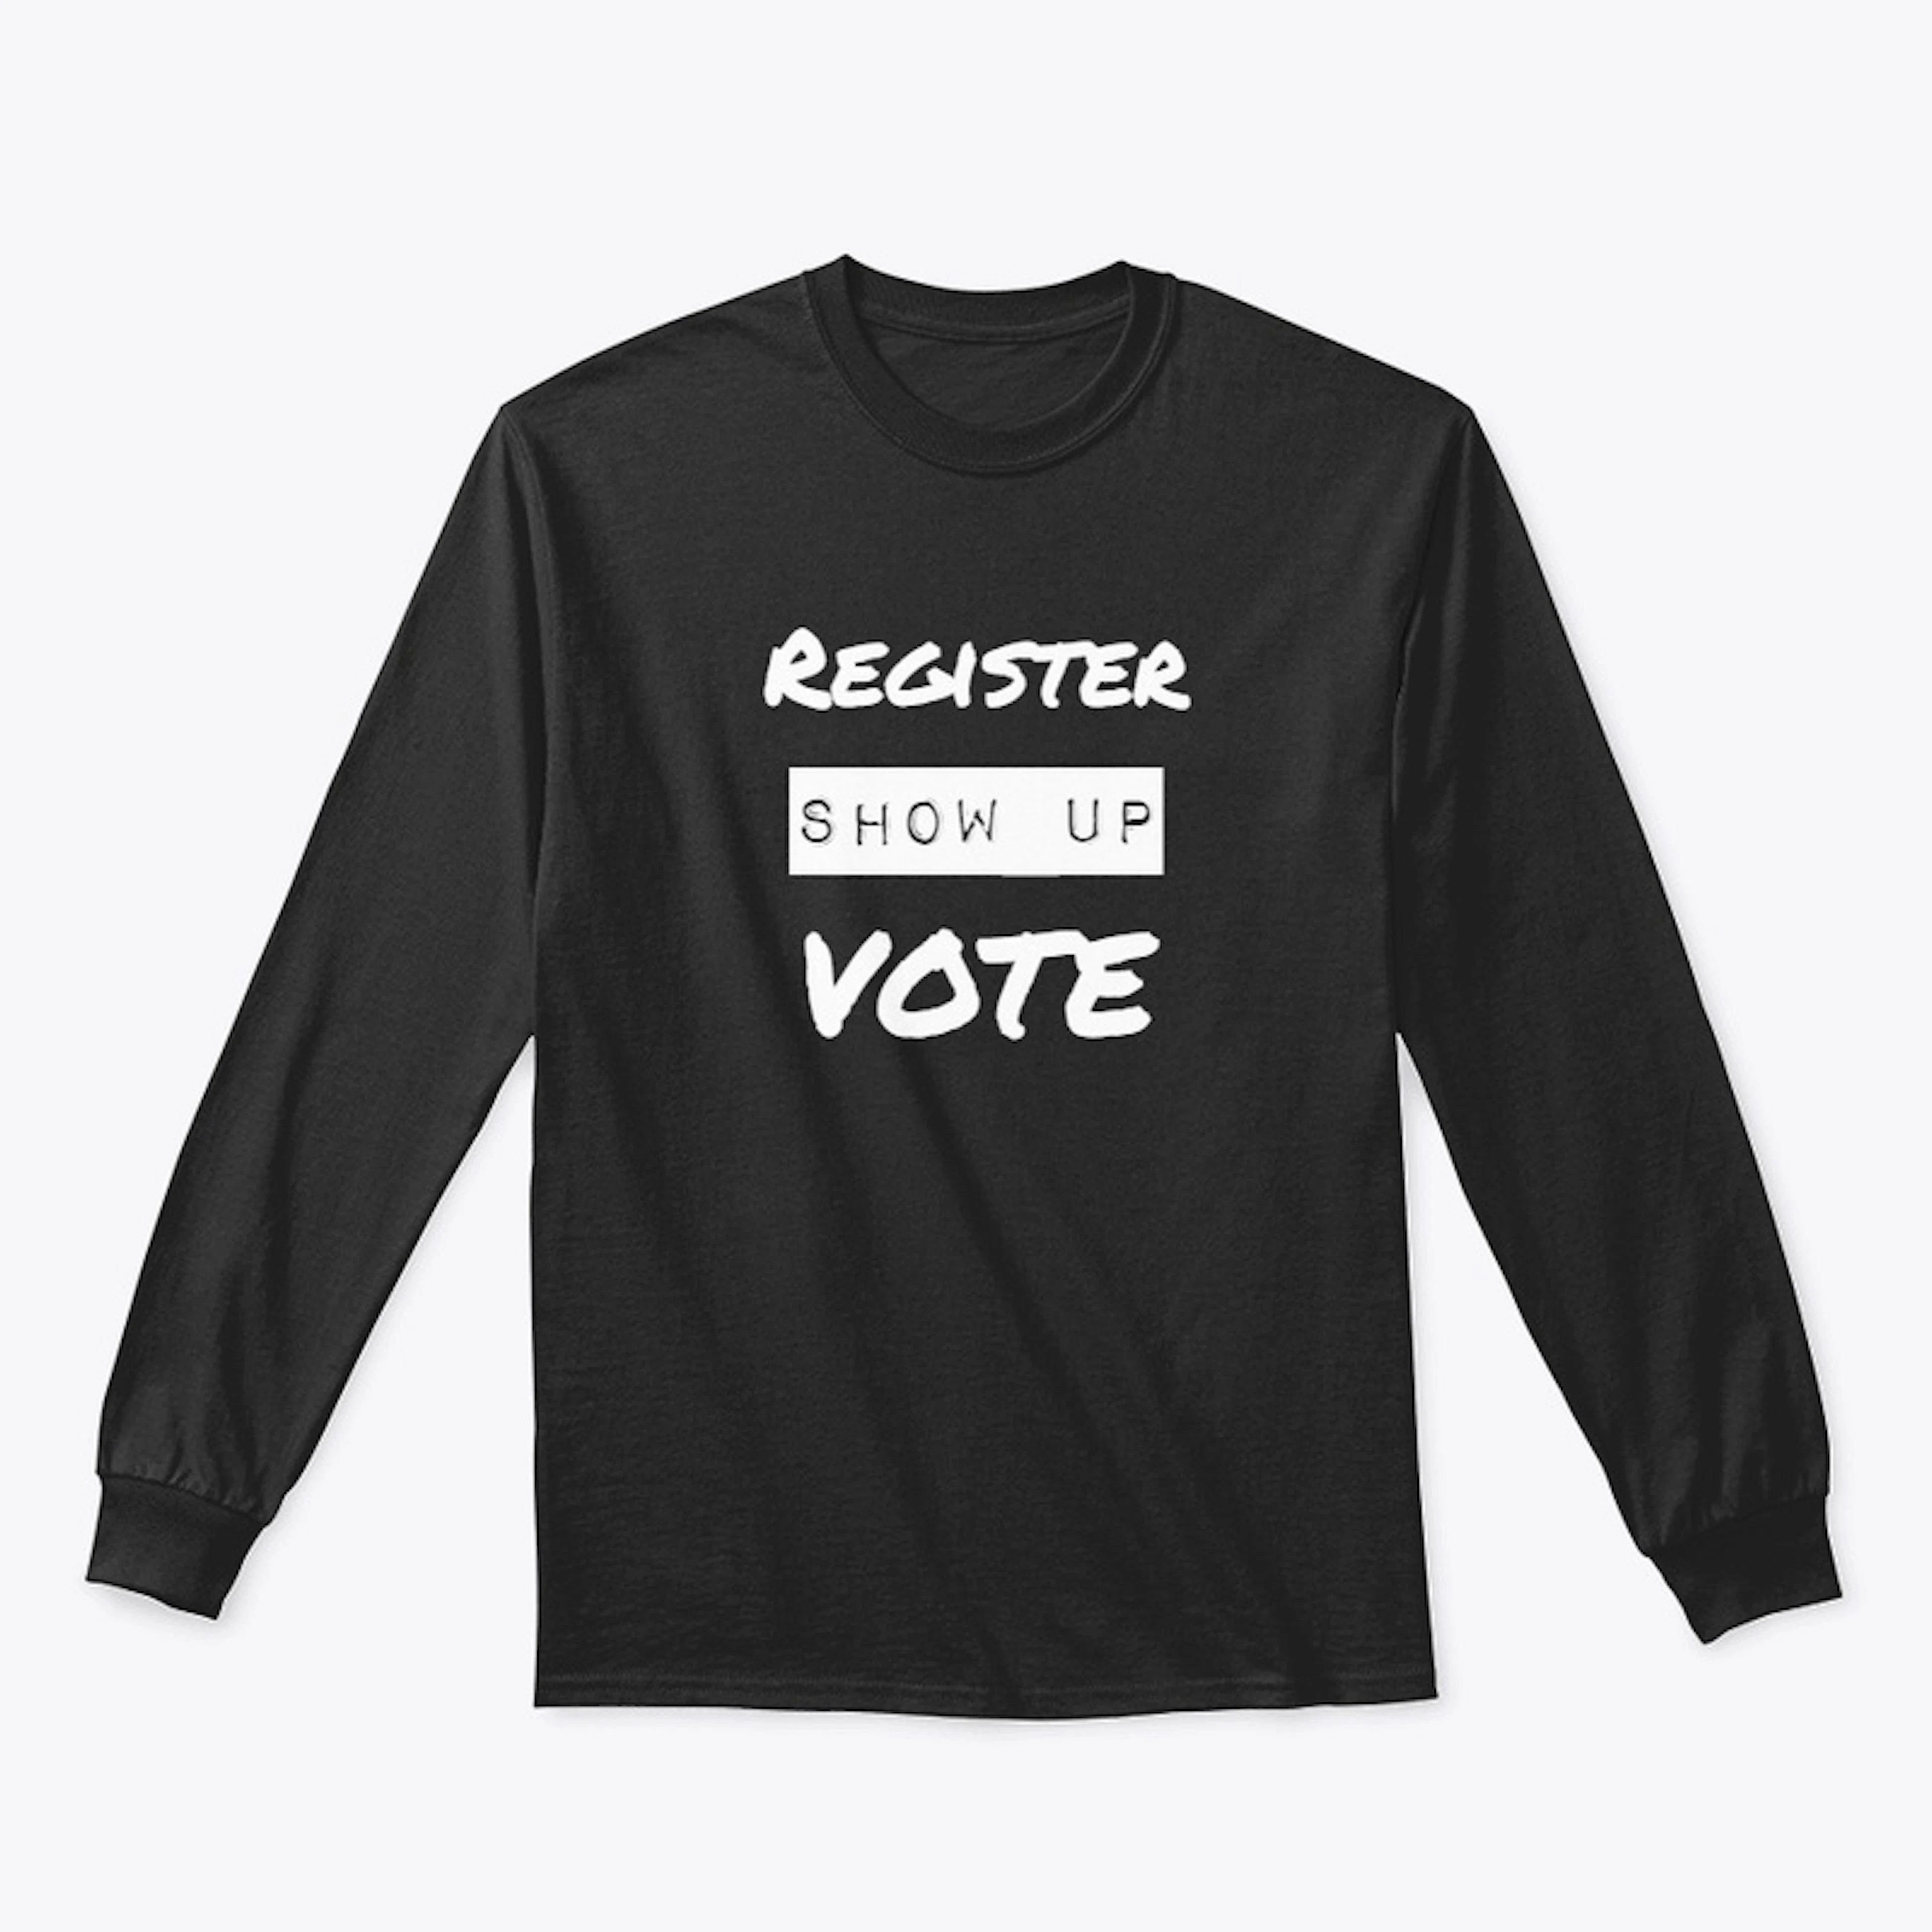 Register Show Up Vote